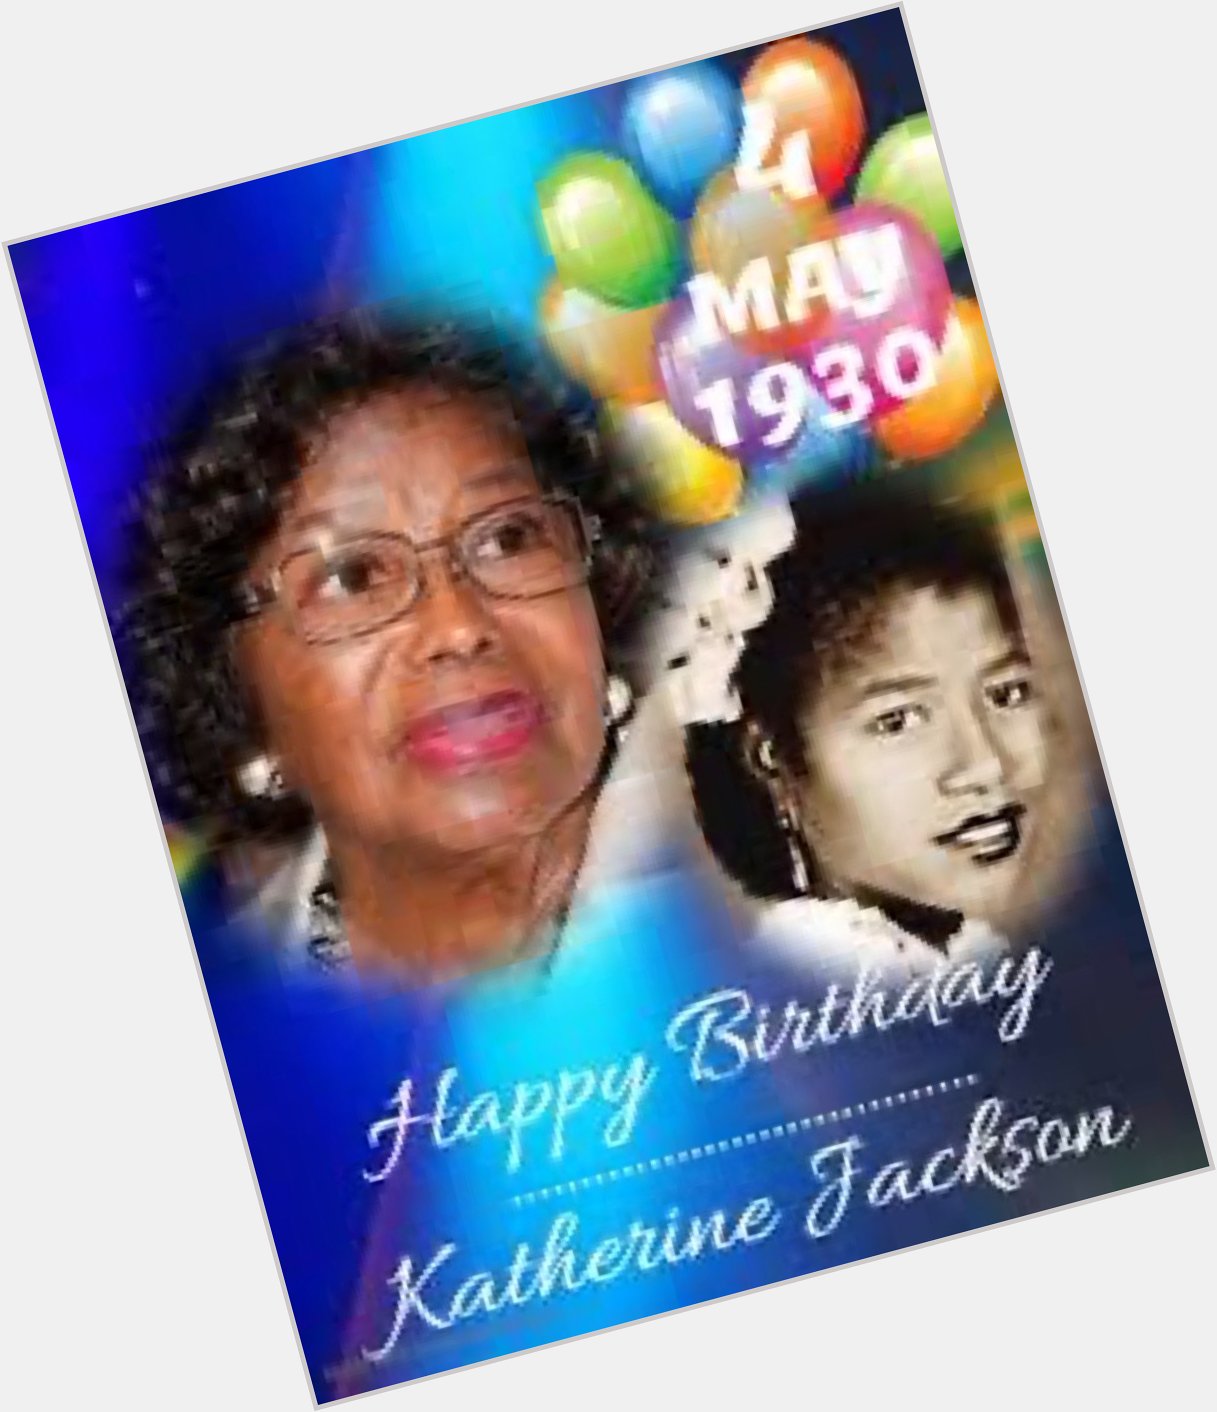   & Happy birthday to Jackie Jackson! 